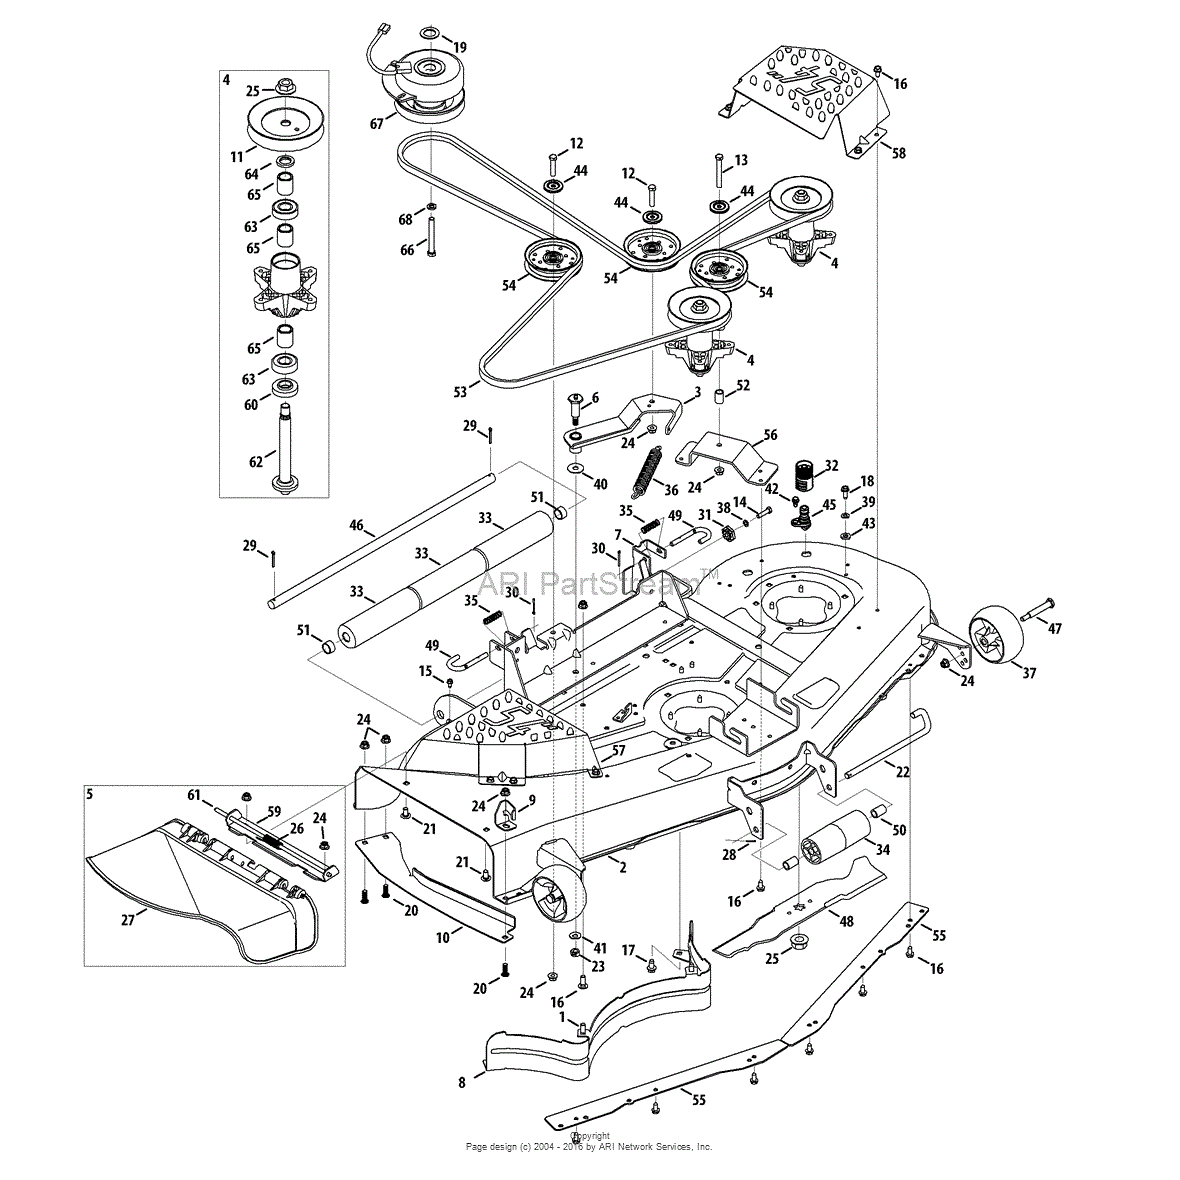 33 Craftsman 54 Mower Deck Parts Diagram